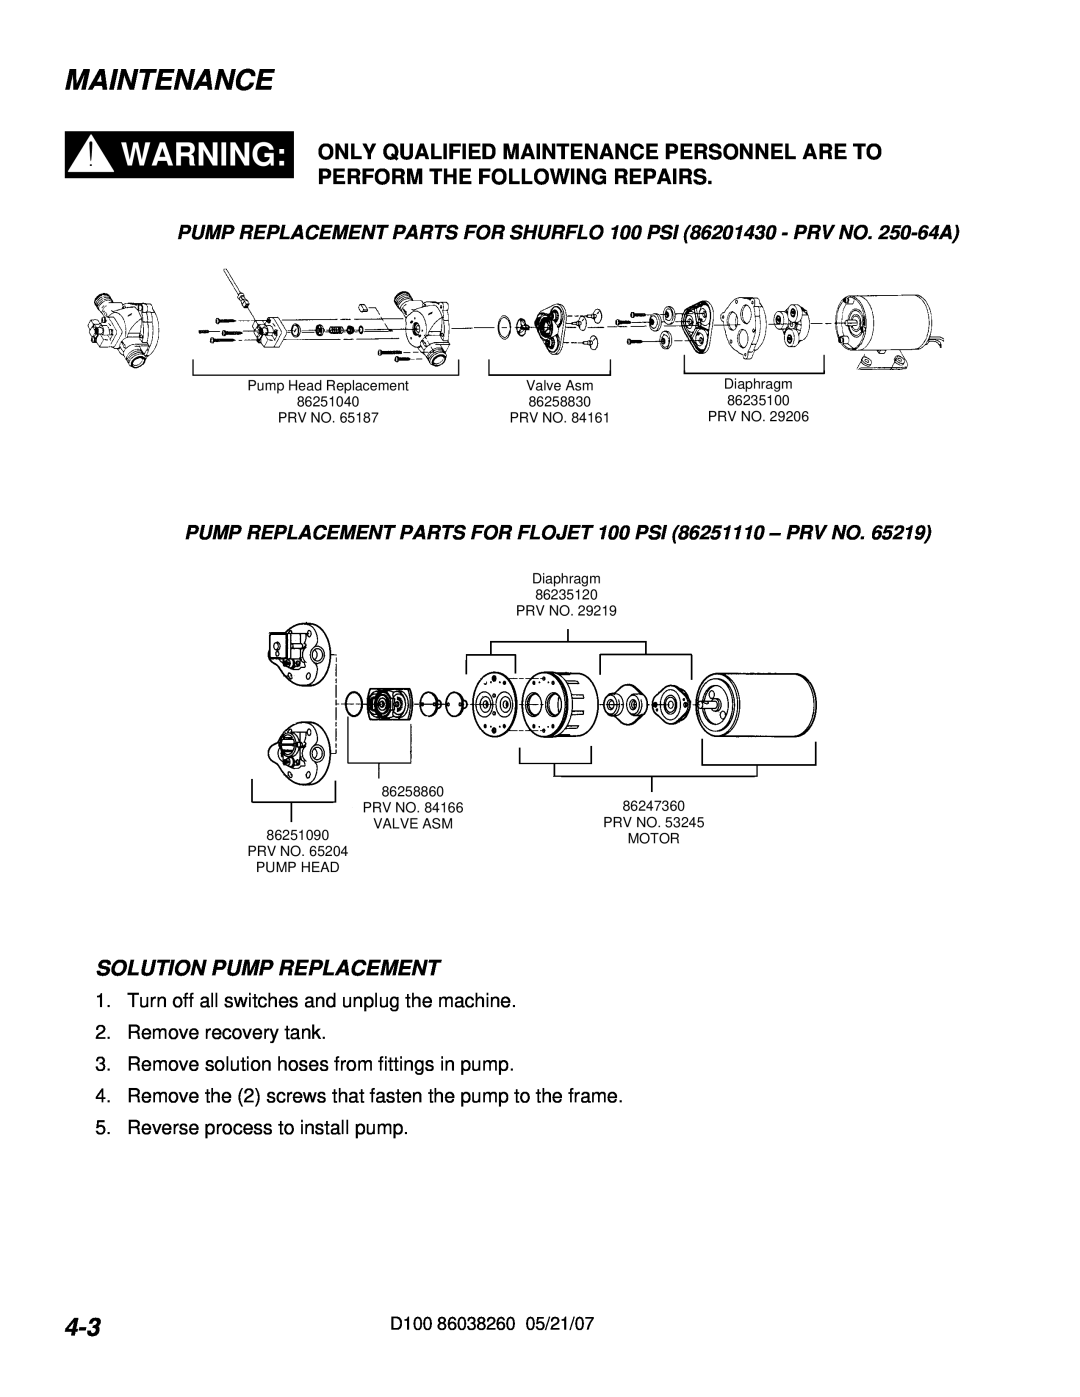 Windsor D100, 10070090 manual Solution Pump Replacement, Maintenance 